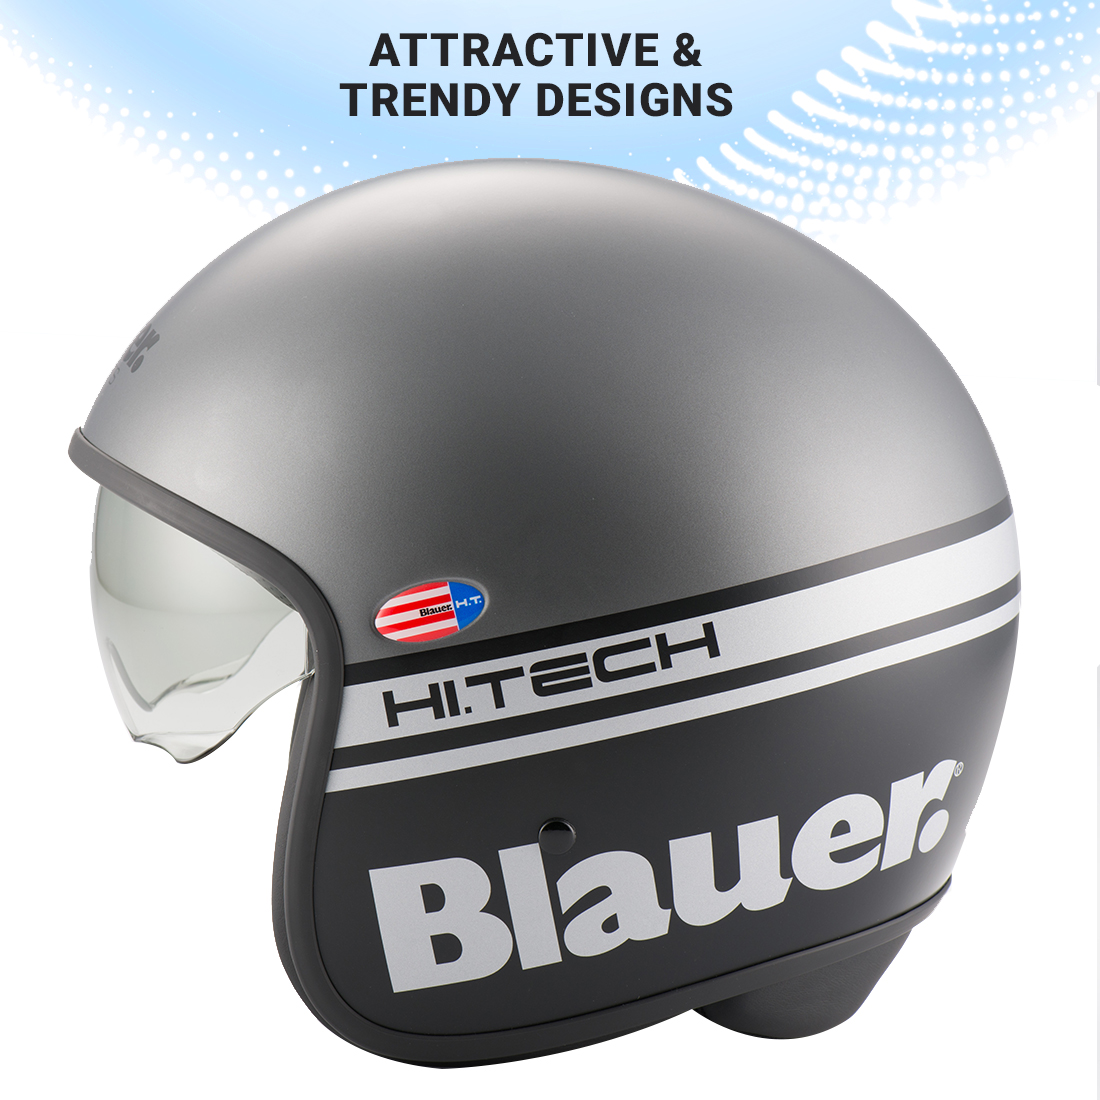 Steelbird Blauer Pilot ISI/ECE Certified Open Face Helmet (Matt Grey)